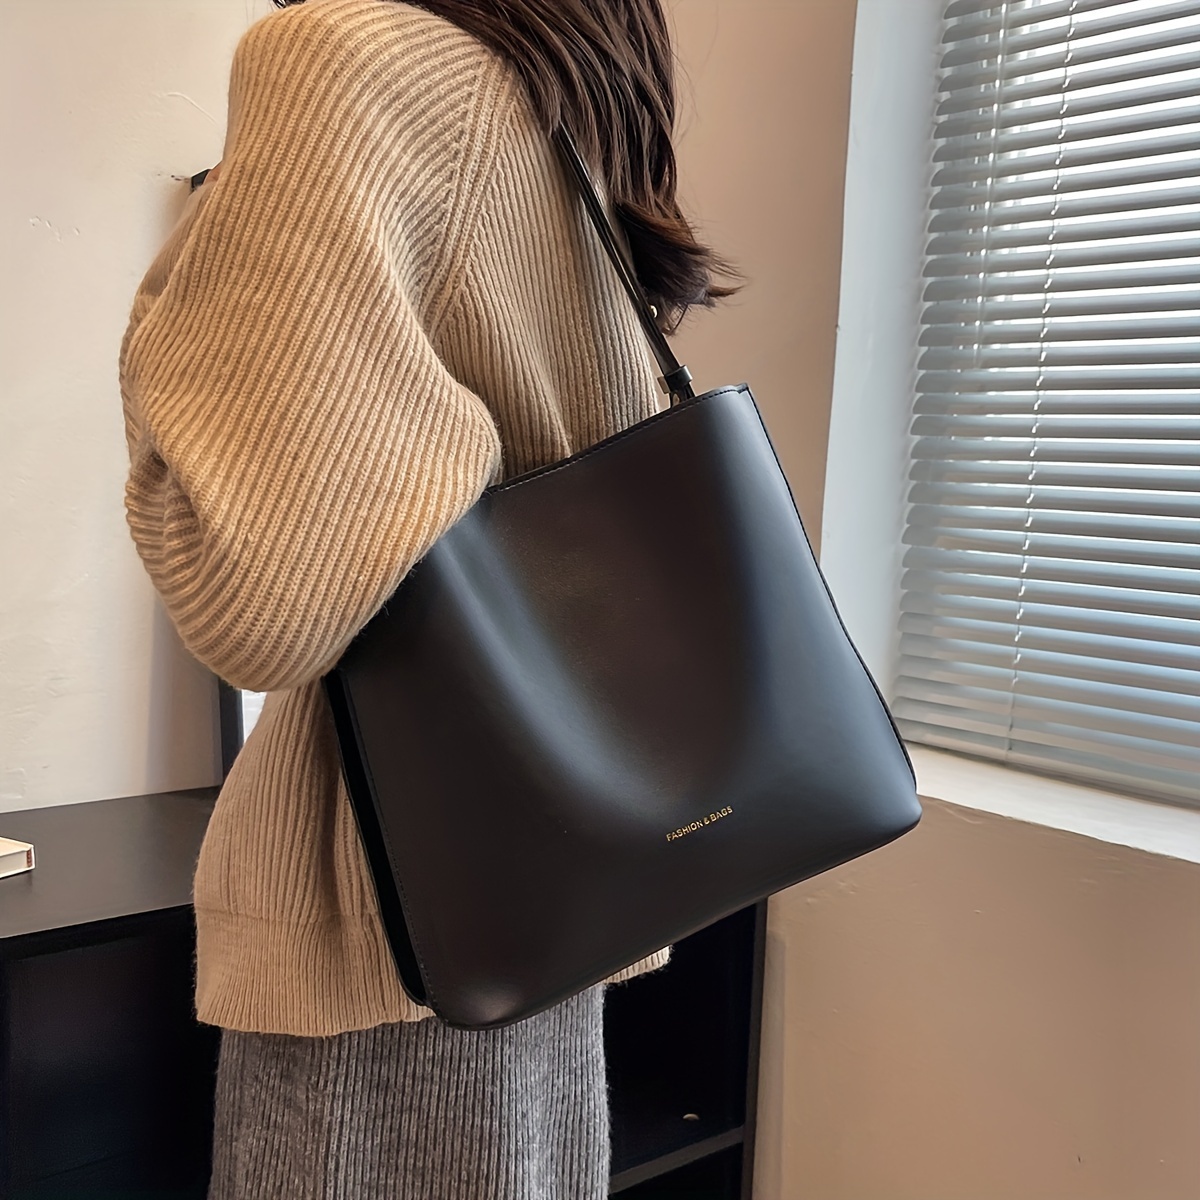 

Elegant Fashion Solid Color Pu Women's Shoulder Bag, Black, 11.02x12.2x4.53 Inches, Versatile Bucket Bag For Everyday Use